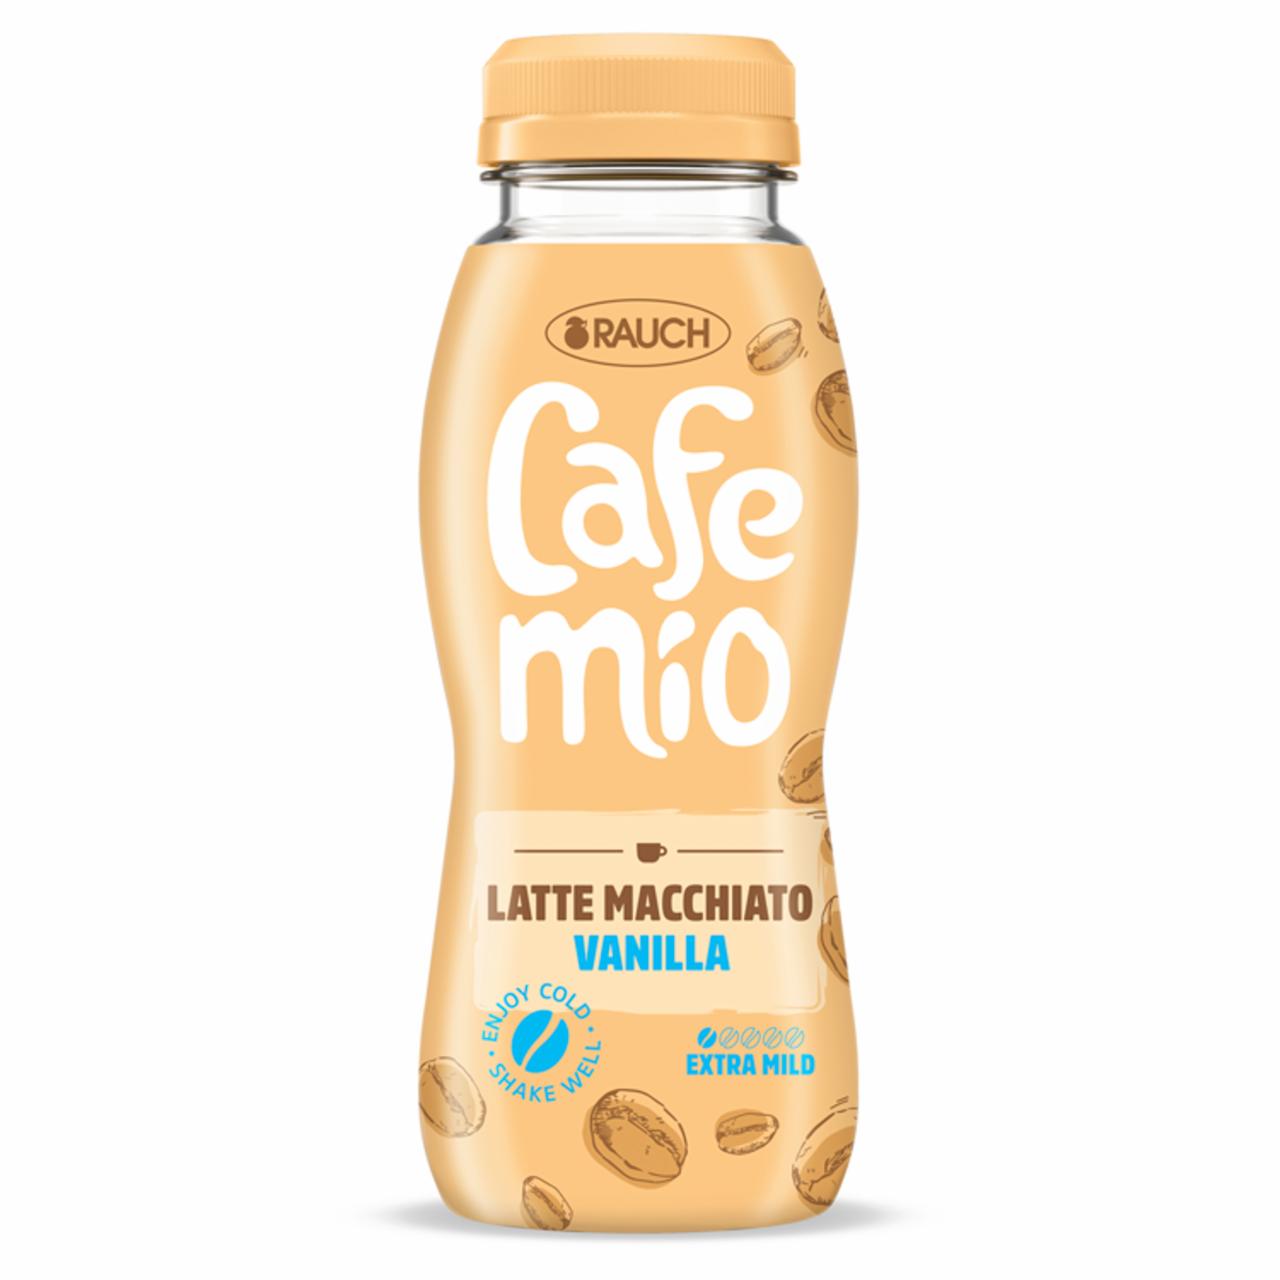 Képek - Rauch Cafe Mio Latte Macchiato Vanilla kávéital tejjel 250 ml